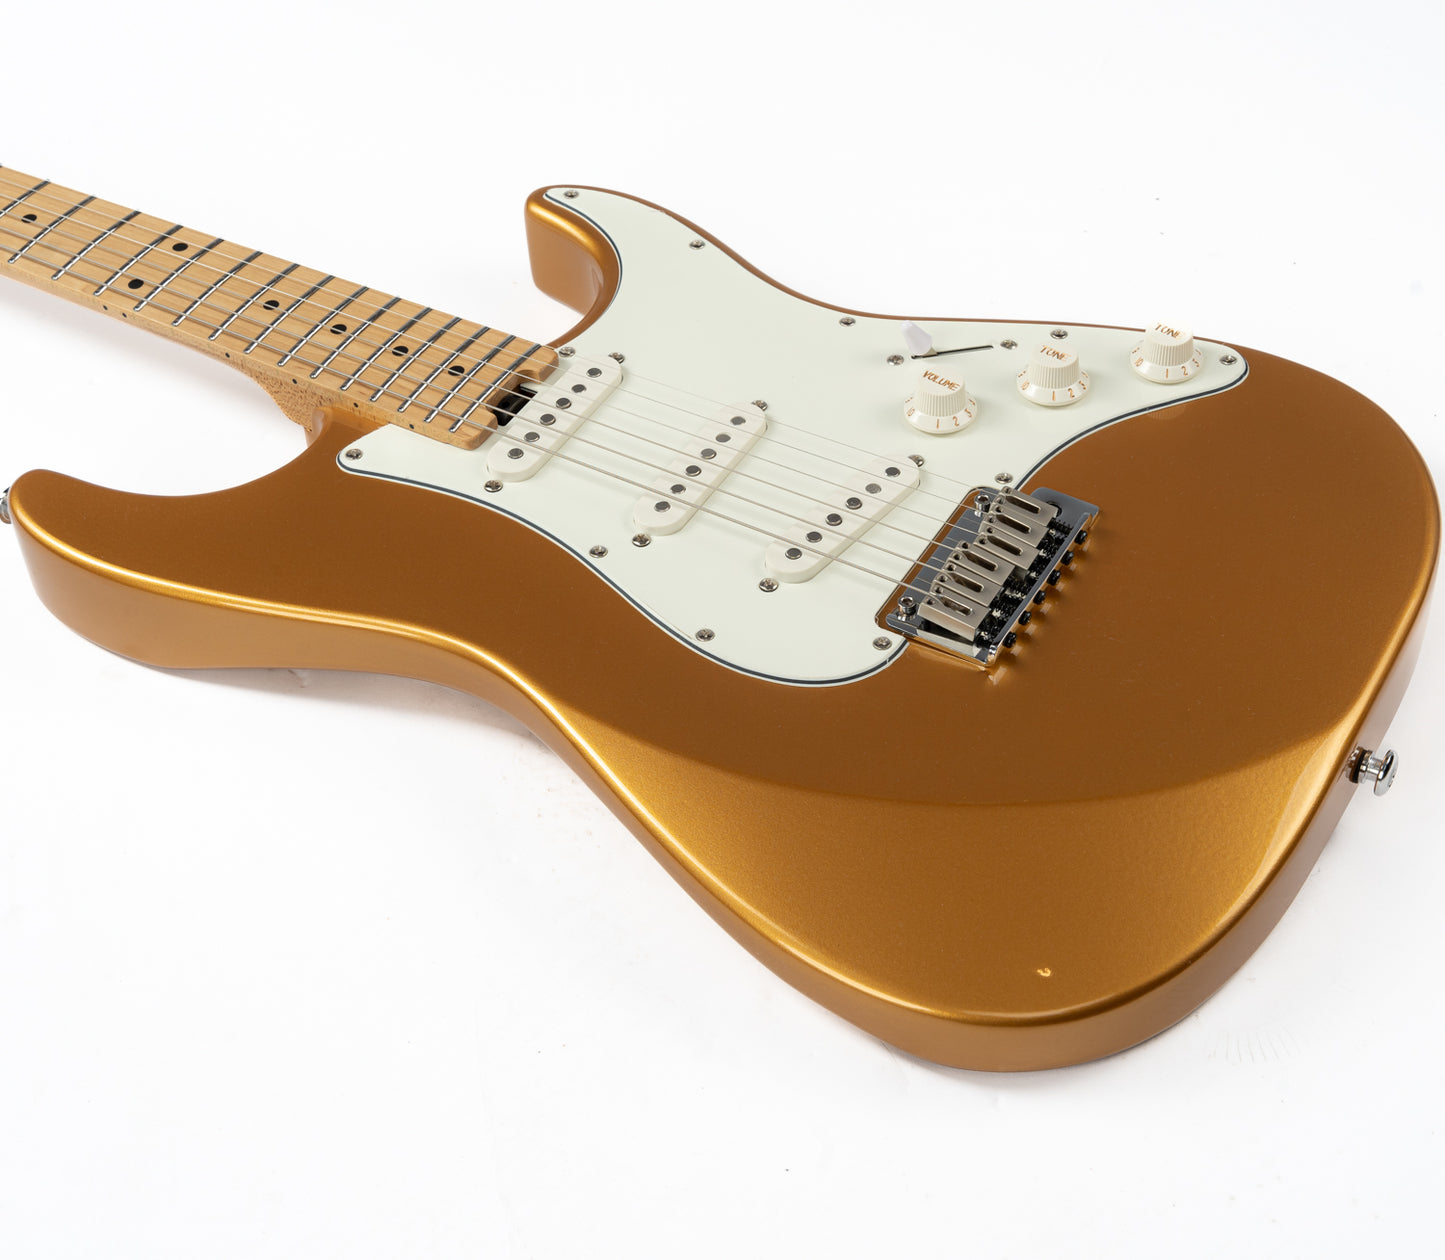 Eart Guitars, NK-VS60, 2-Point Synchronized Tremolo Bridge Alnico V Pickups Classic Electric Guitars, Gold